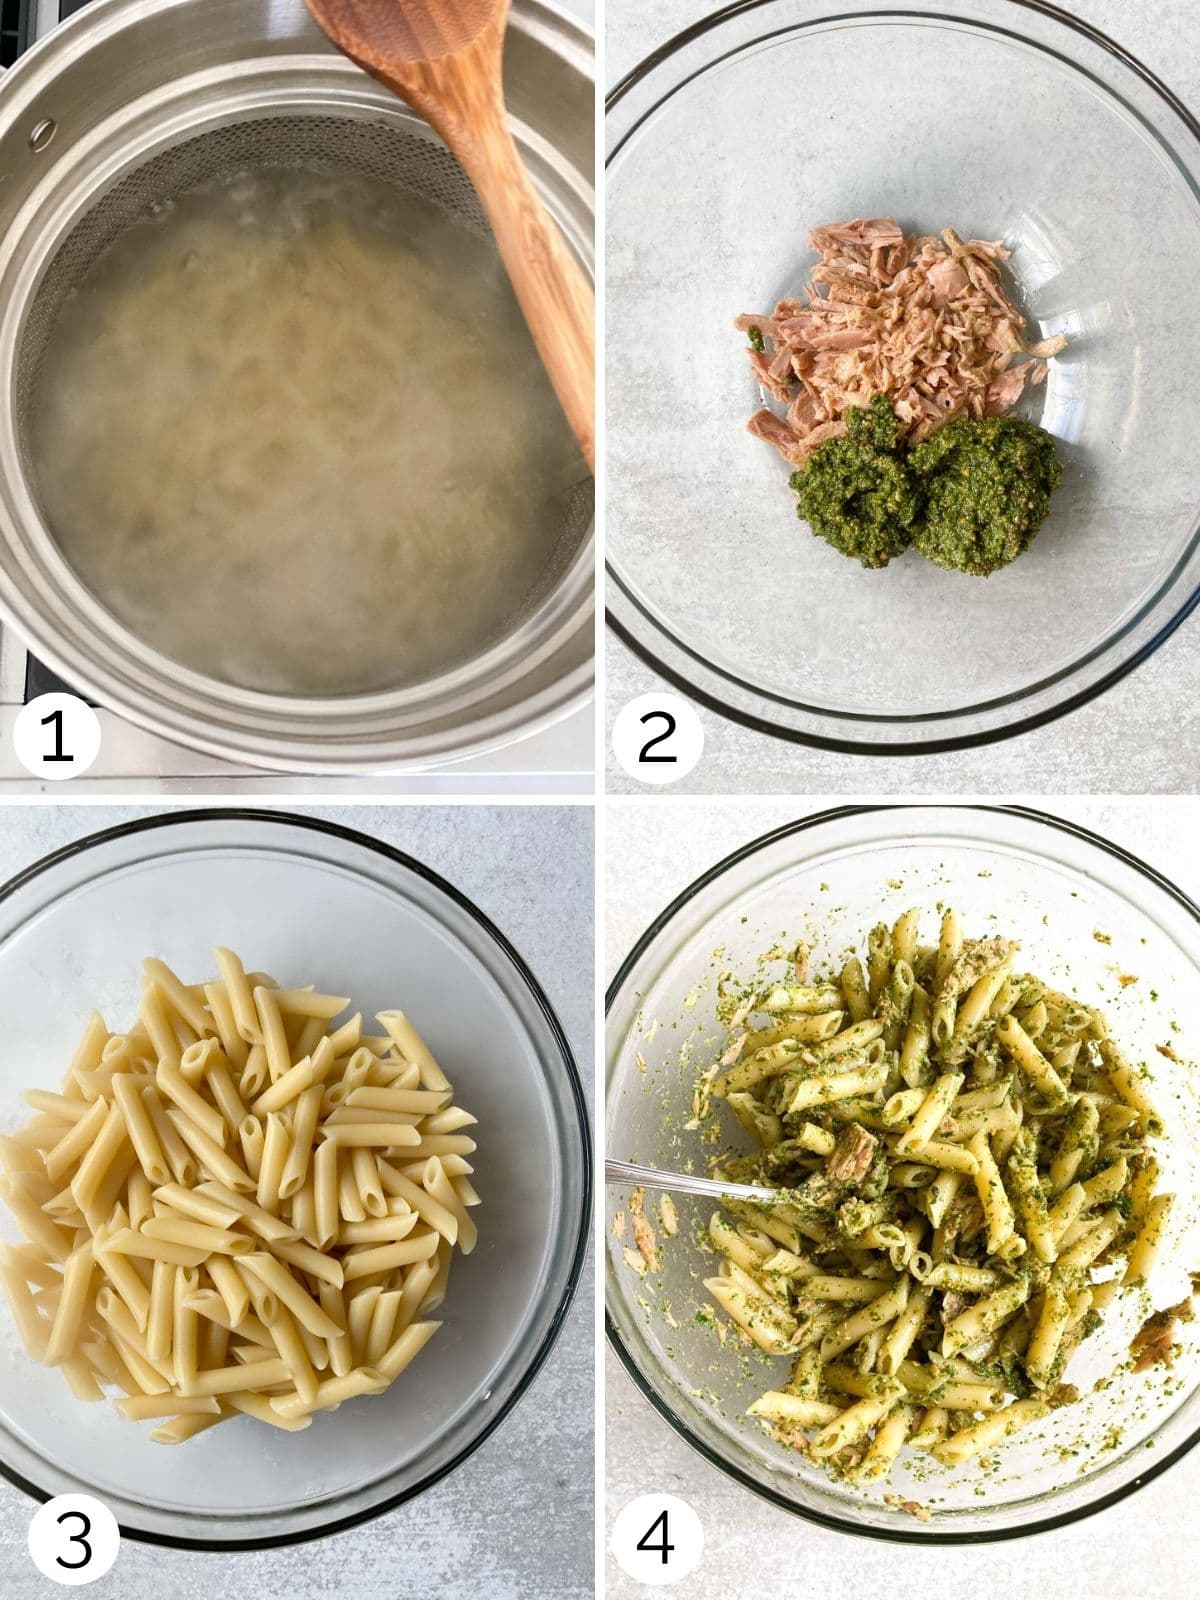 Mixing pasta into tuna and pesto.